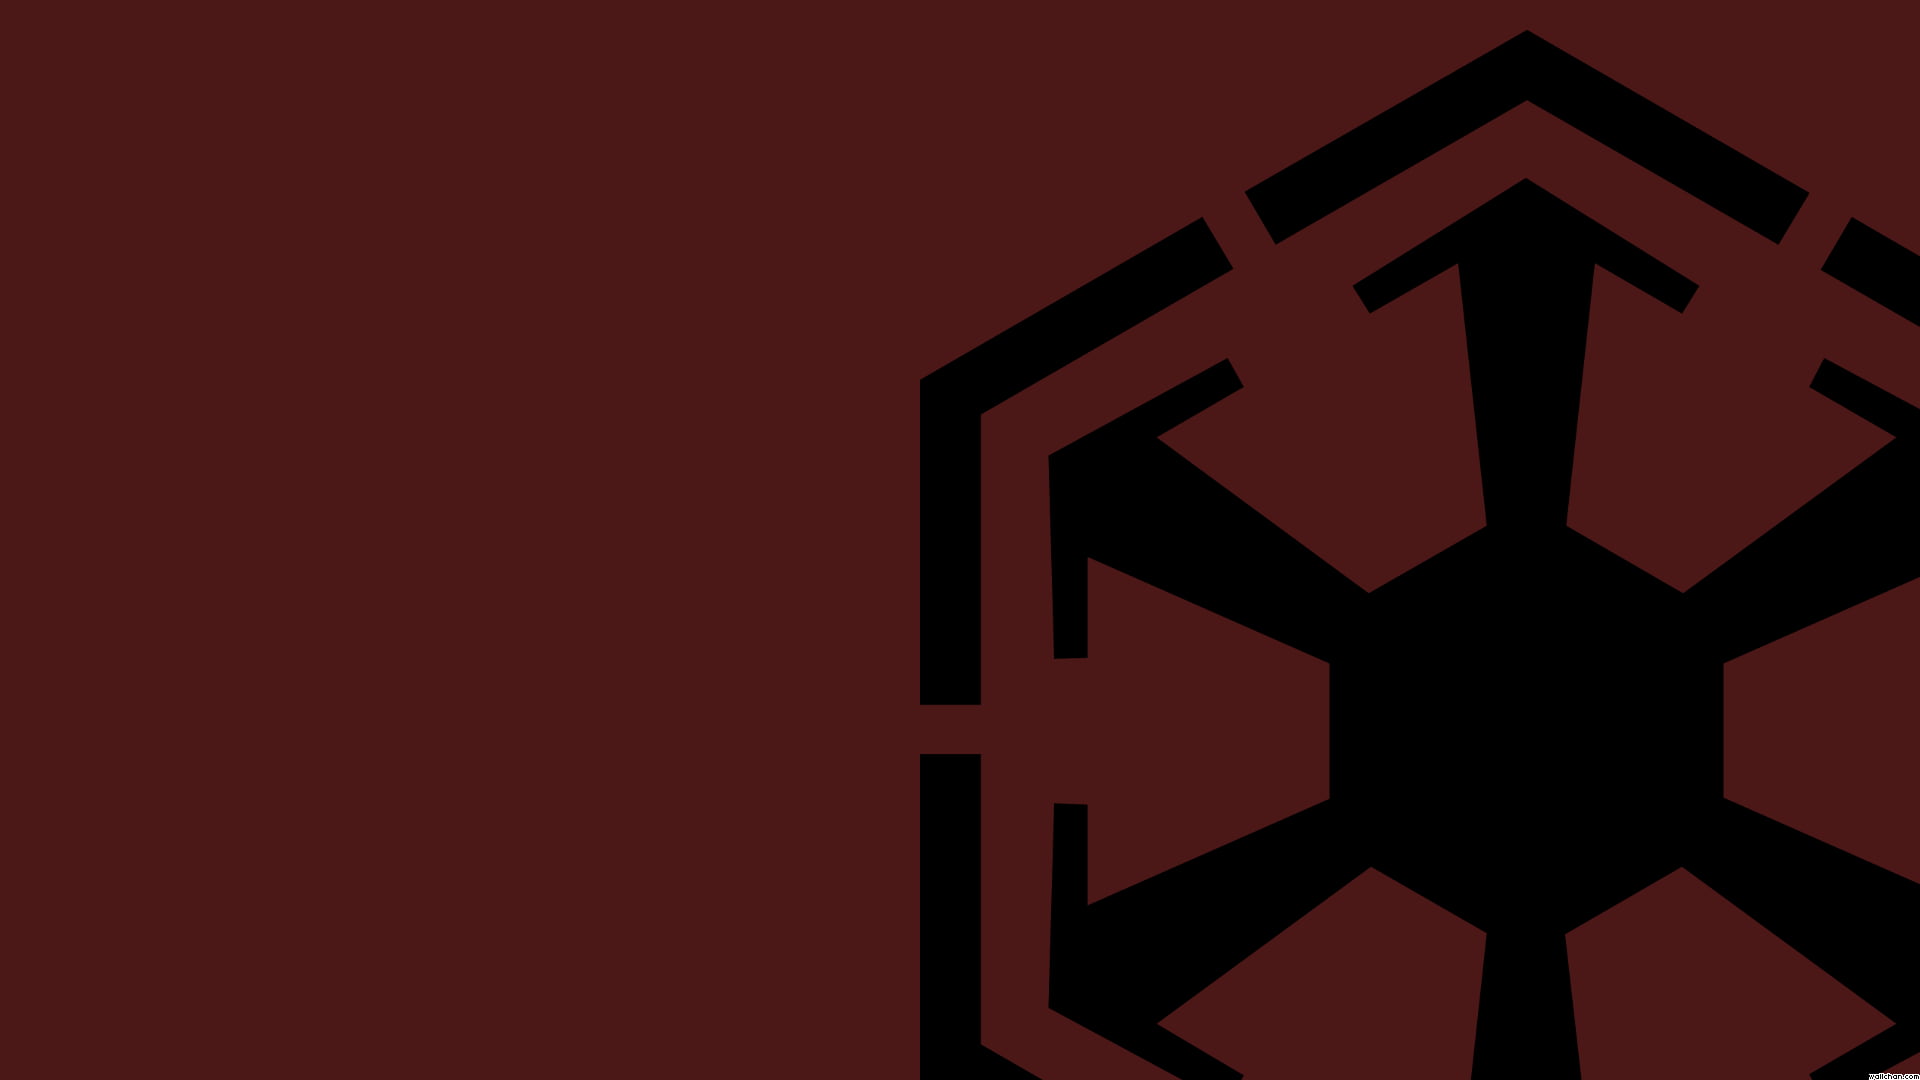 Black 6 Sided Logo Star Wars Logo Minimalism Red Background Hd